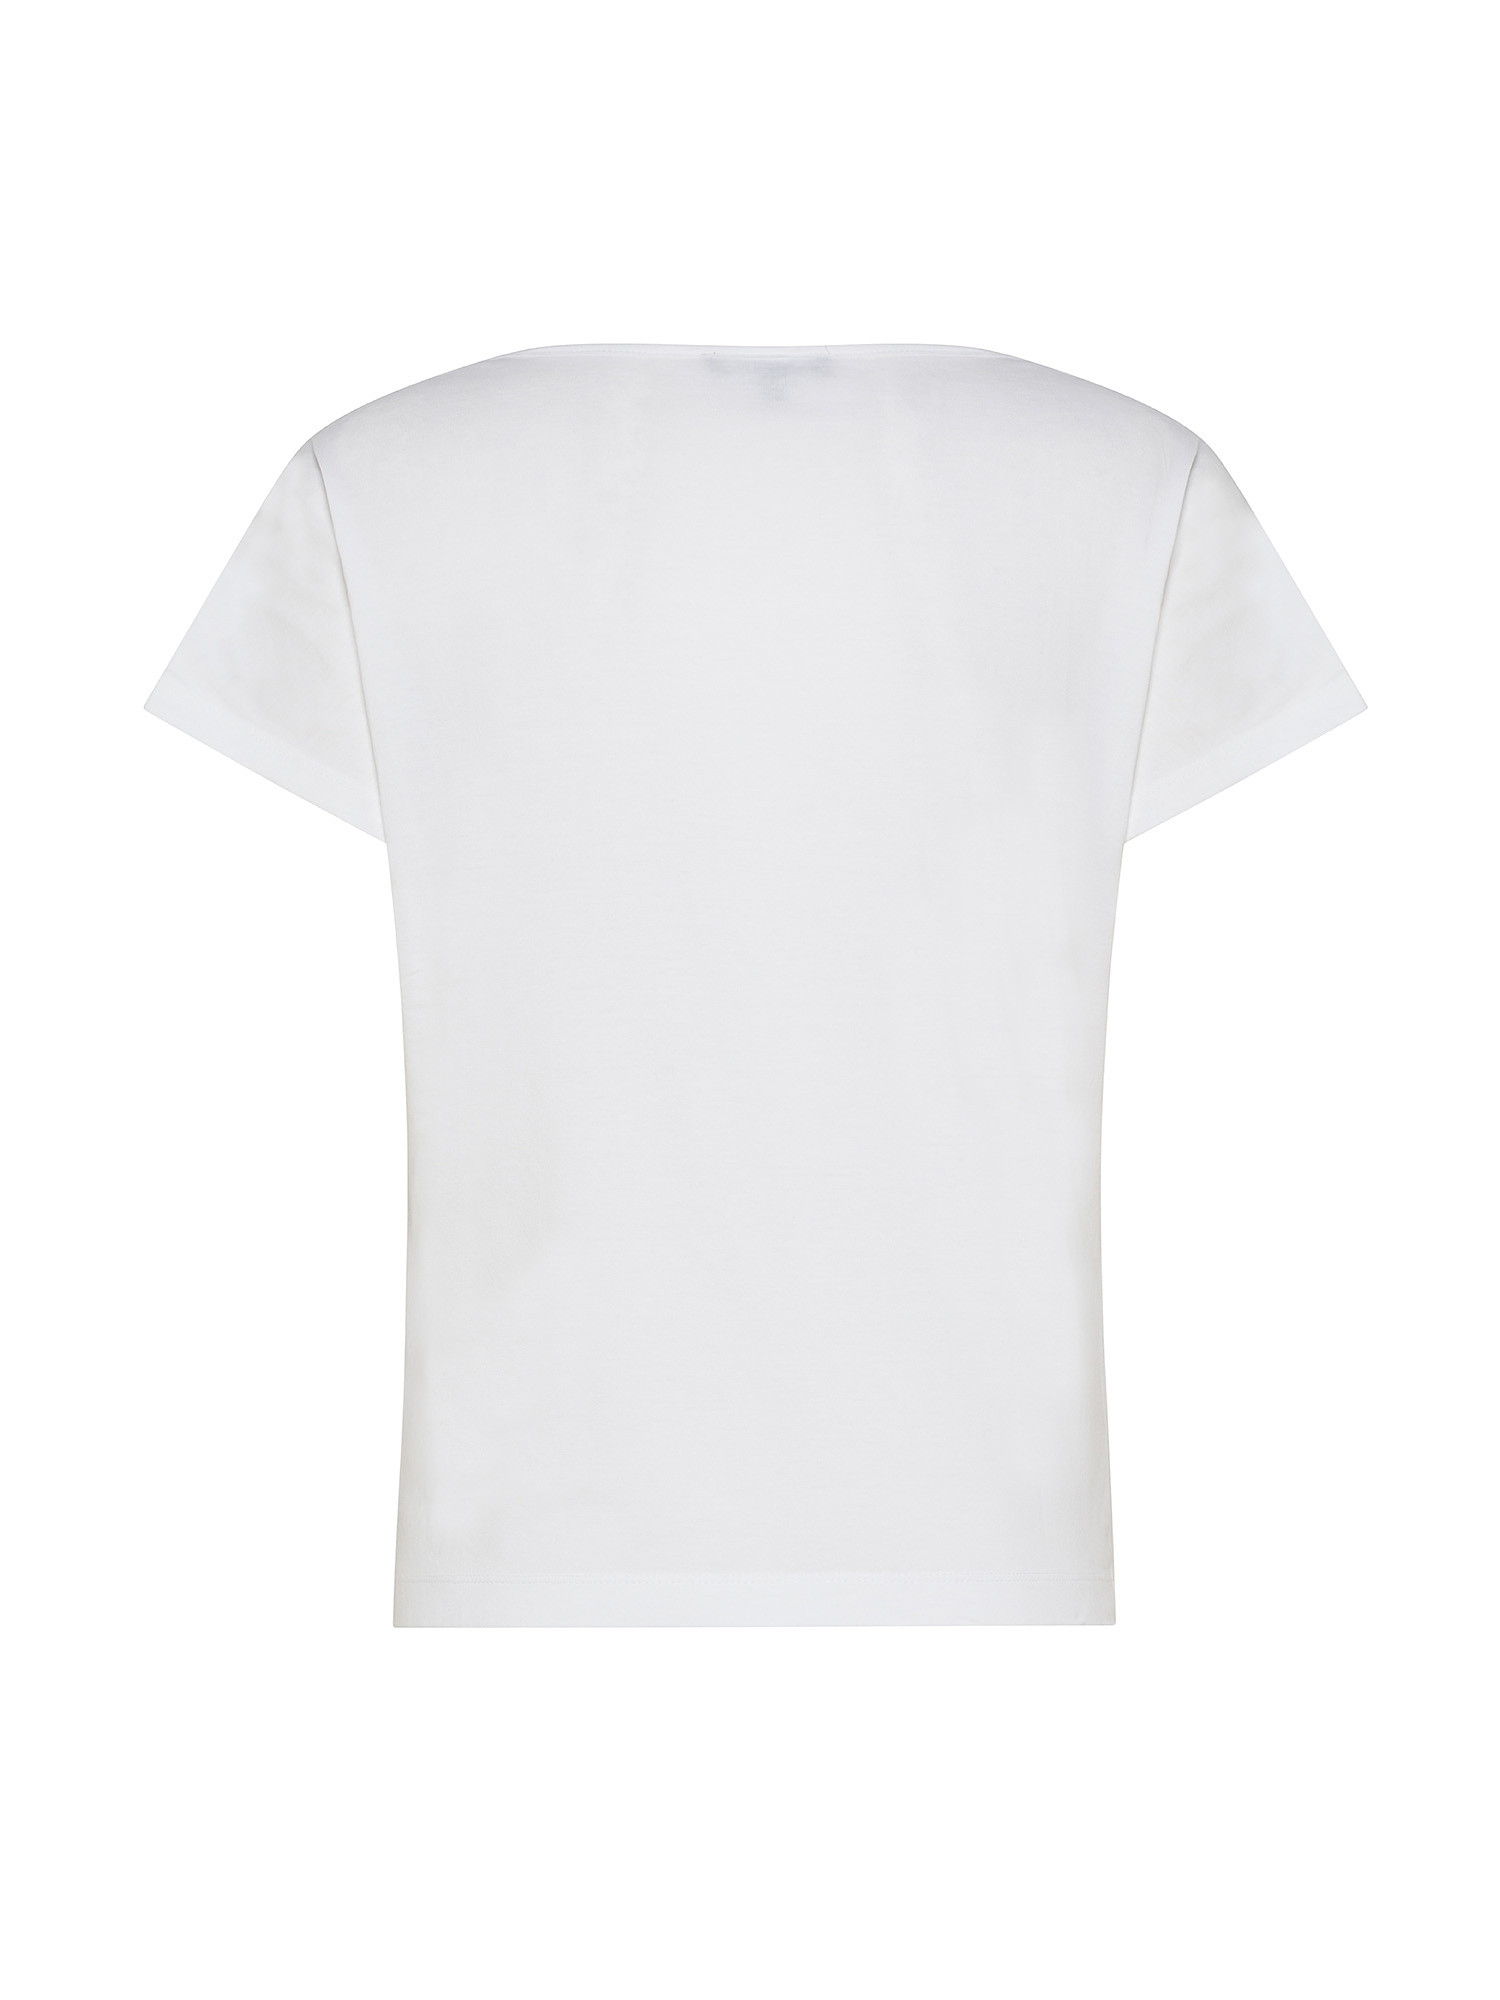 Koan - T-shirt con ricamo, Bianco, large image number 1